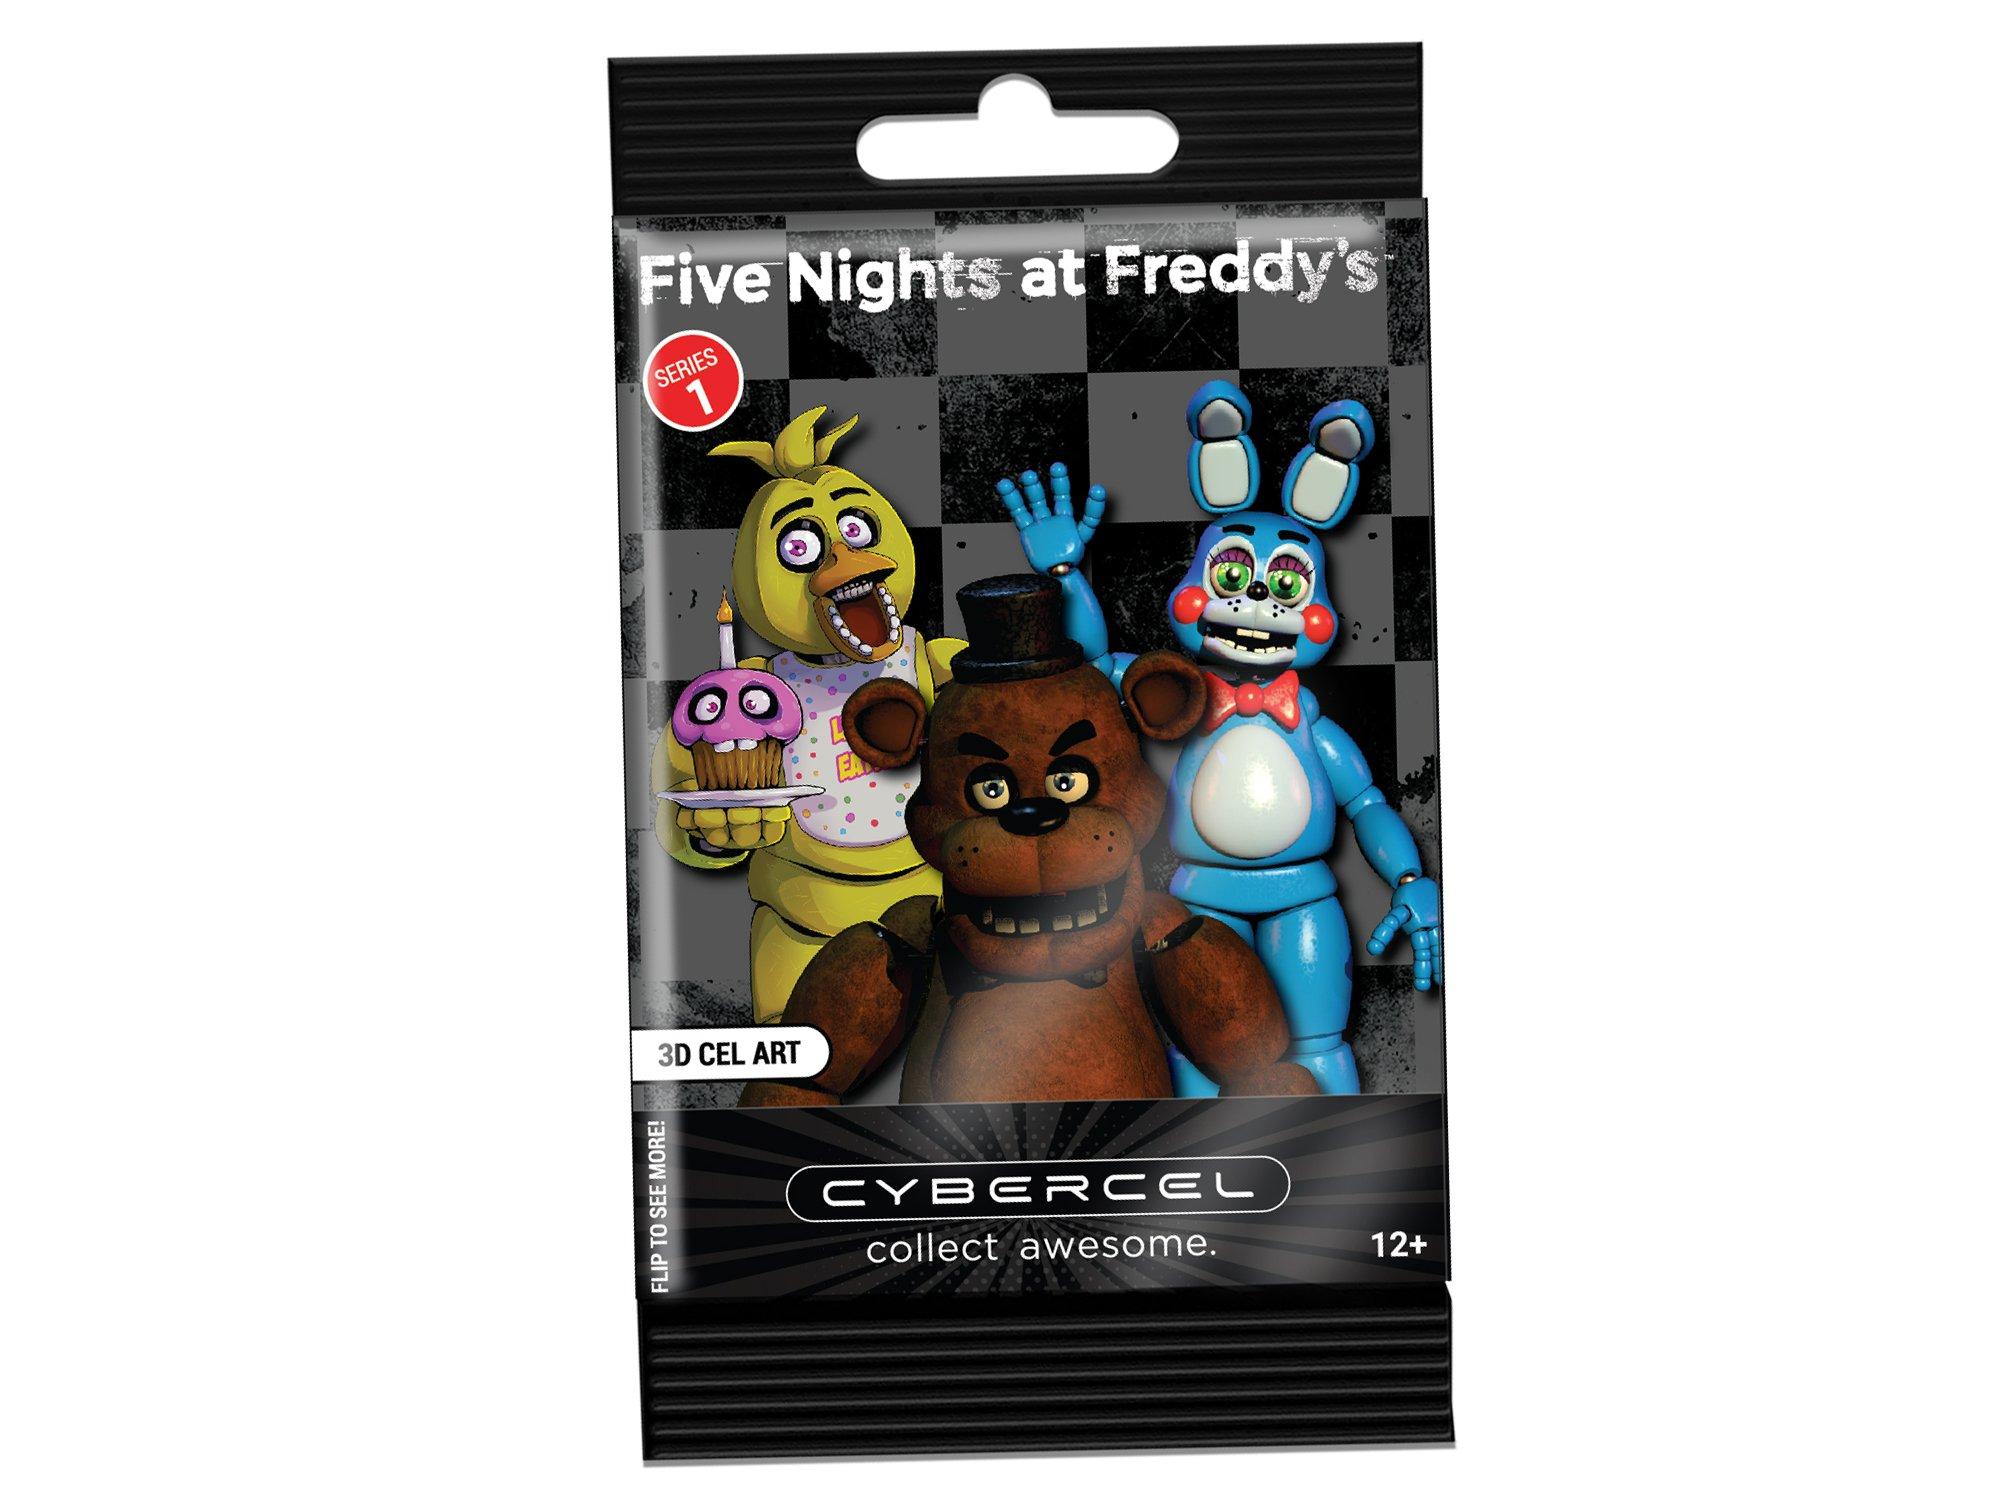 FNAF Five Nights at Freddy's